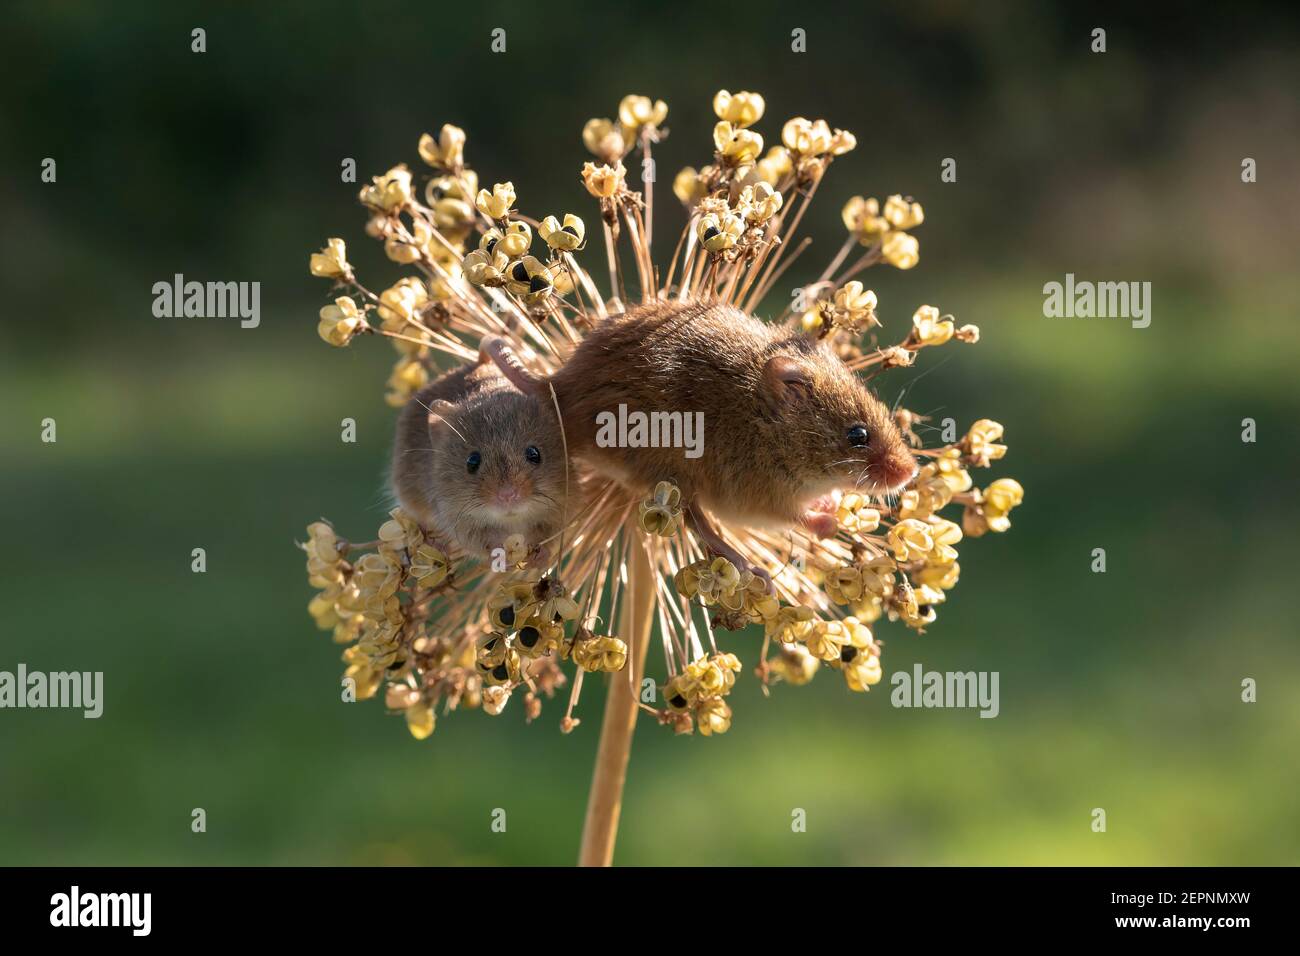 Harvest mice( Micromys minutus) on an allium seed head, Holt, Dorset, UK Stock Photo